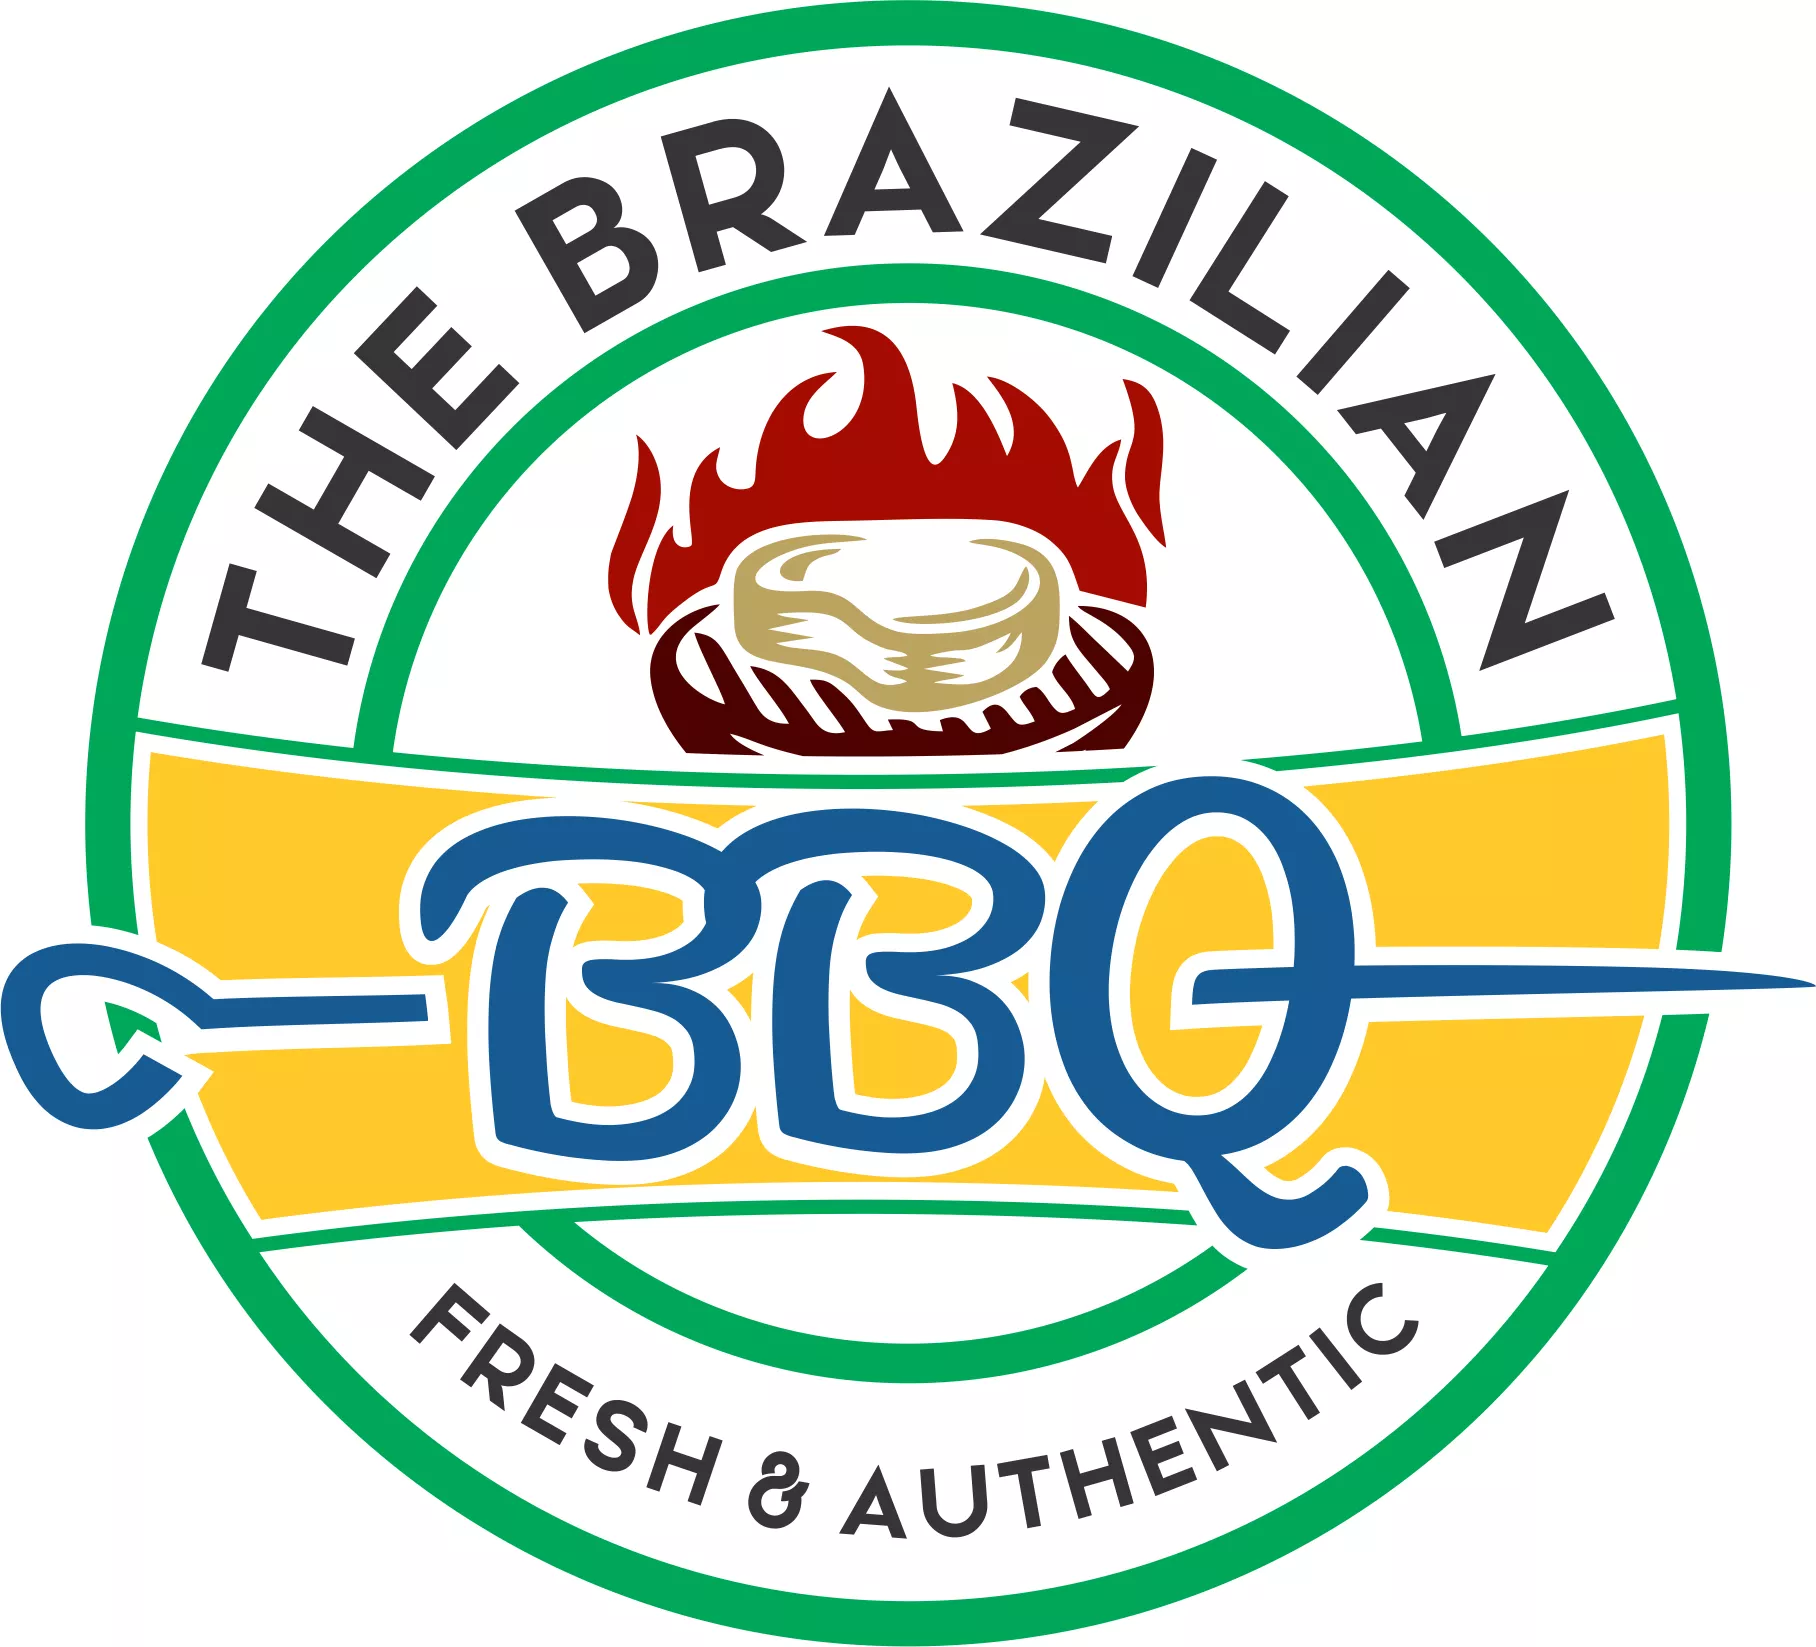 The Brazilian BBQ